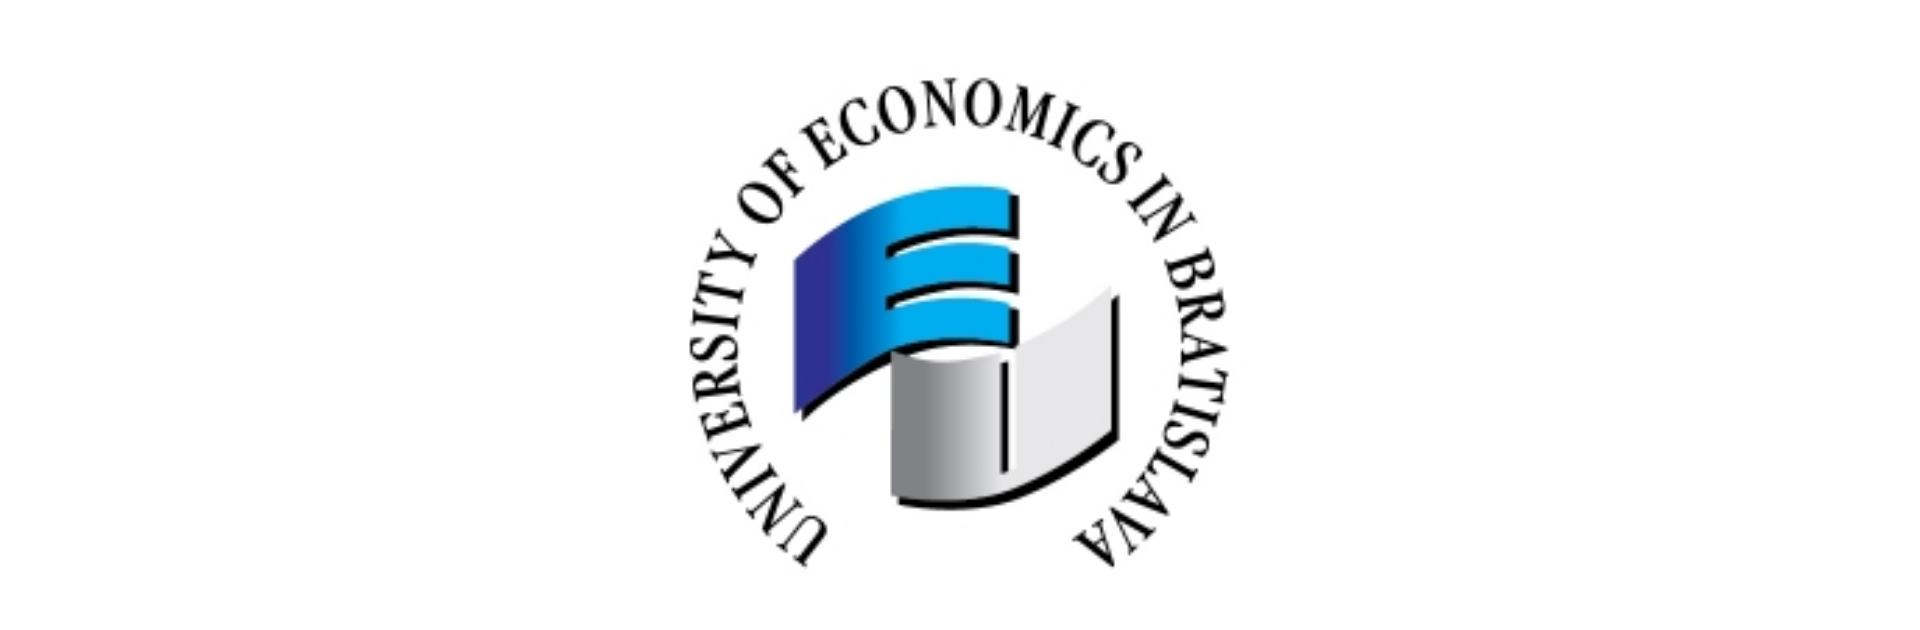 University of Economics in Bratislava 